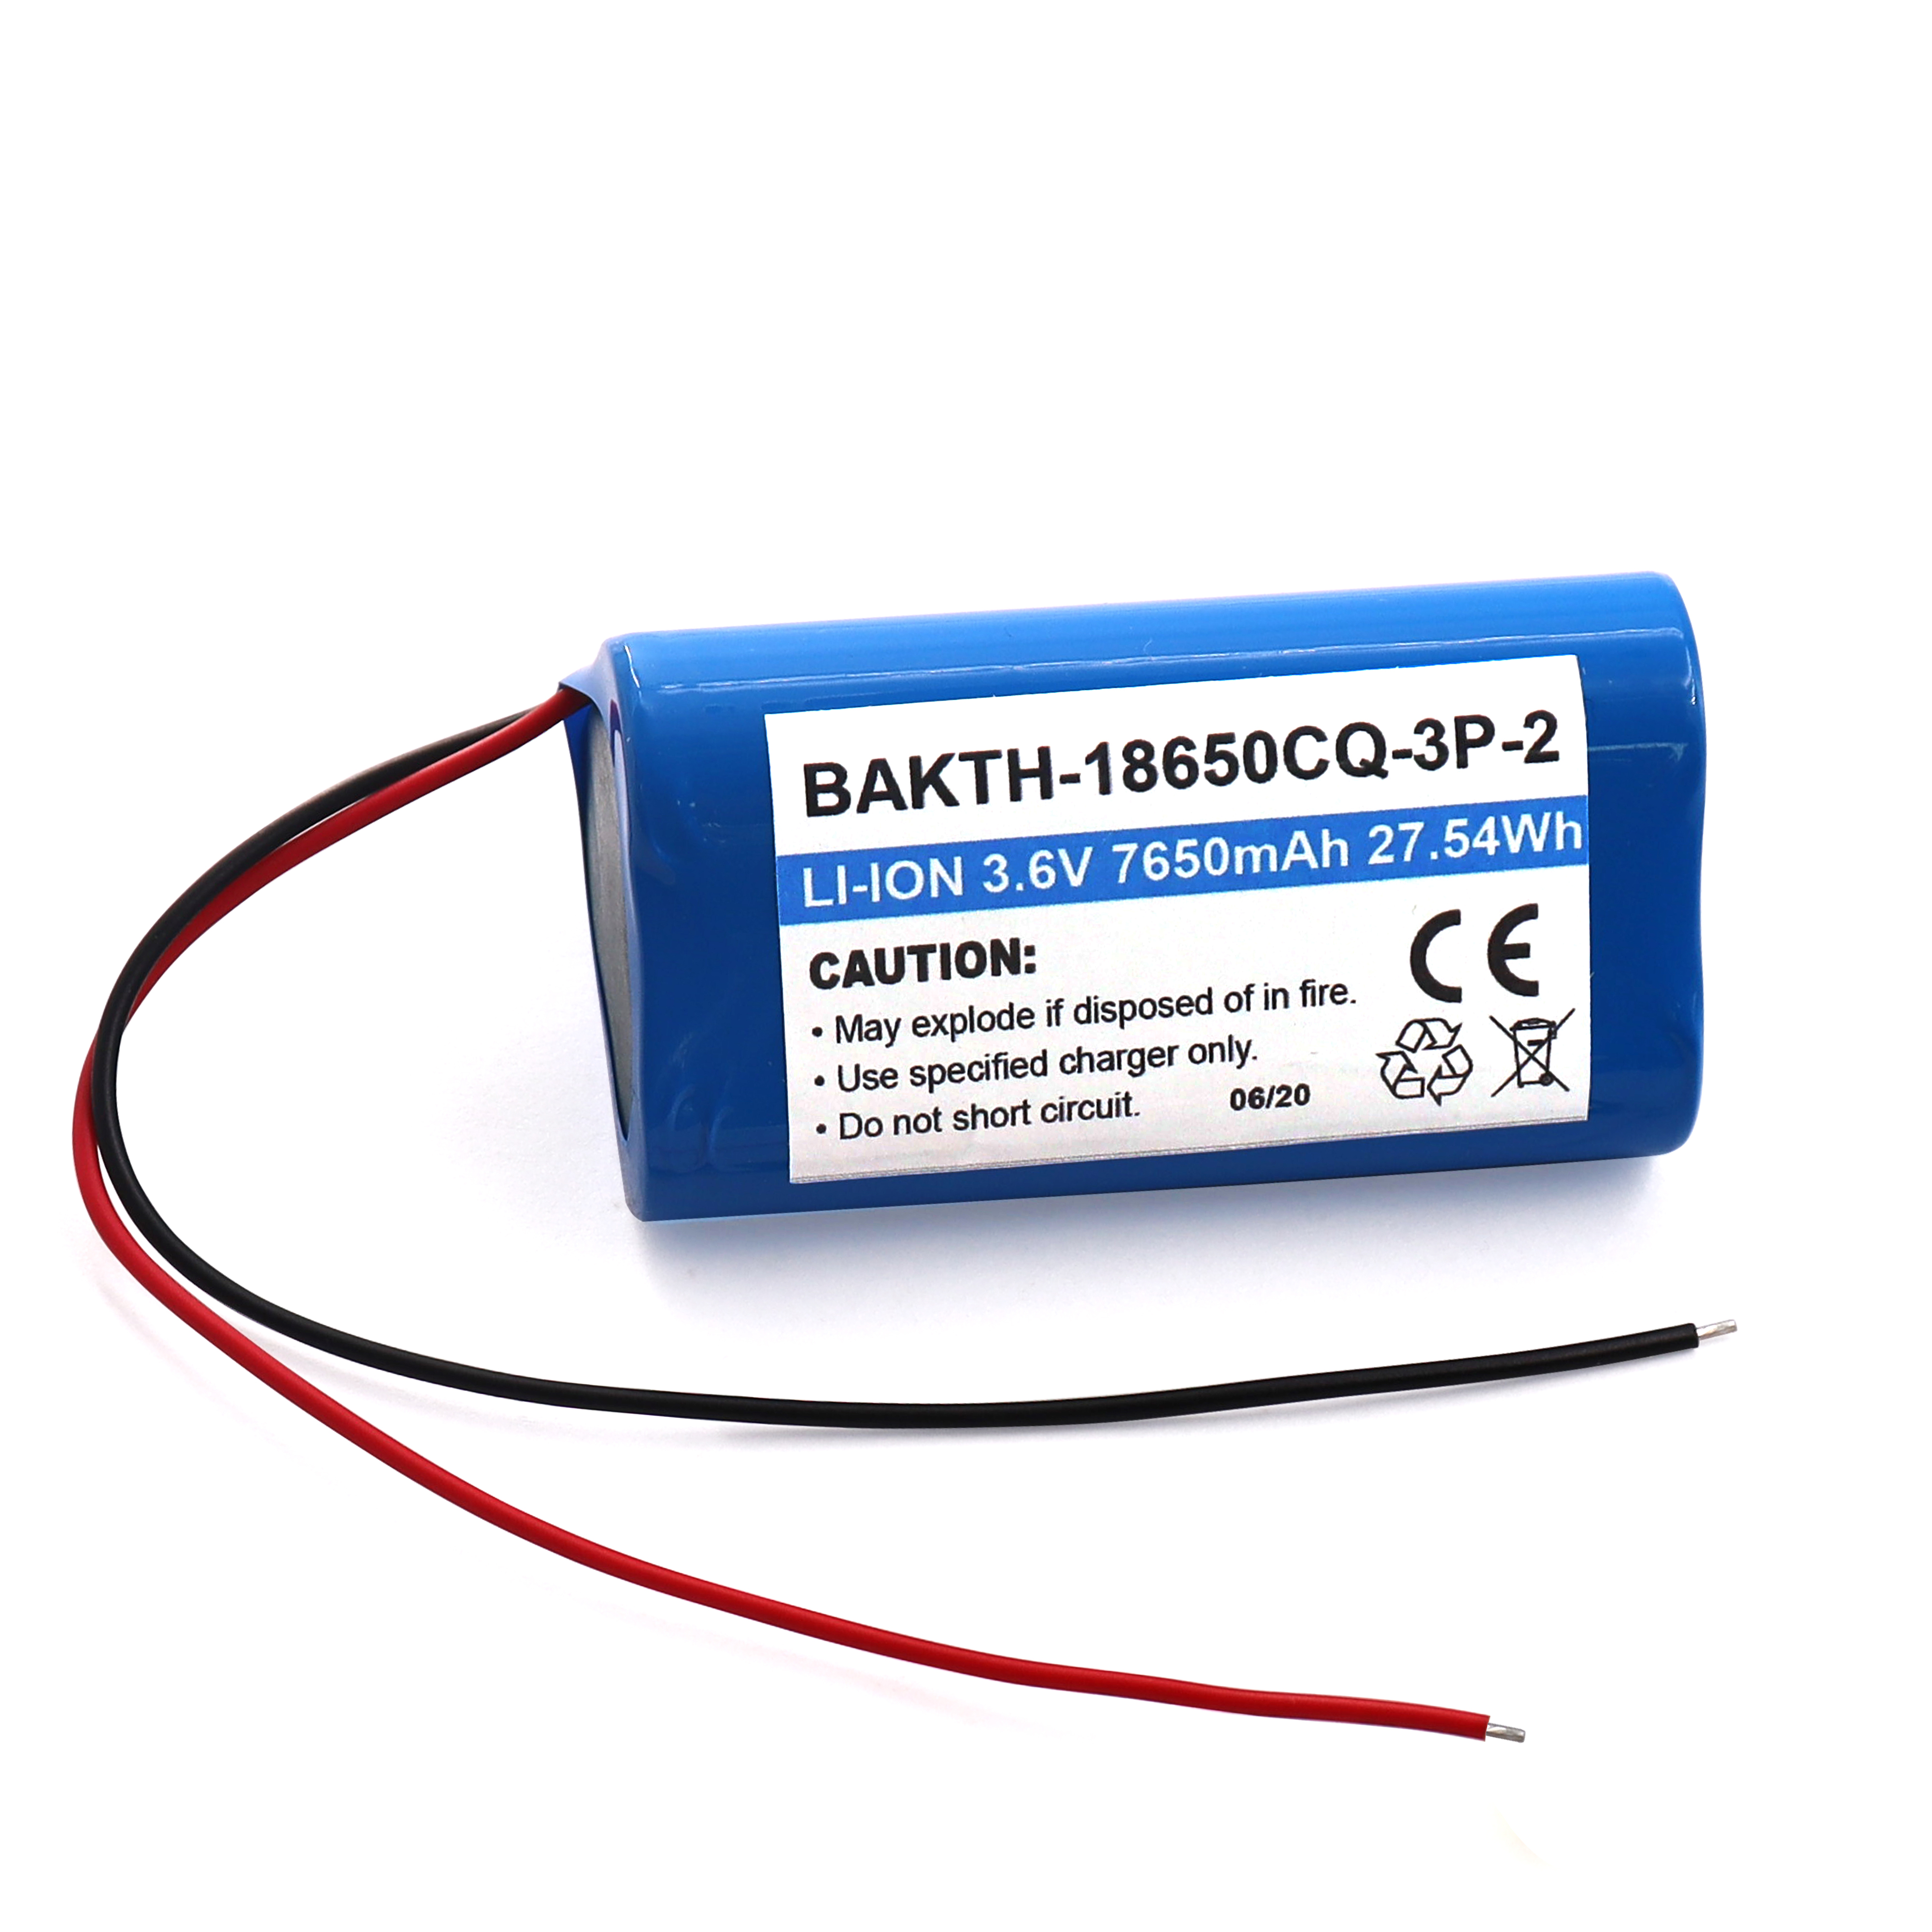 BAKTH-18650CQ-3P-2 3.6V 7650MAH Litio de litio Batería Batery Pack para herramienta de energía eléctrica